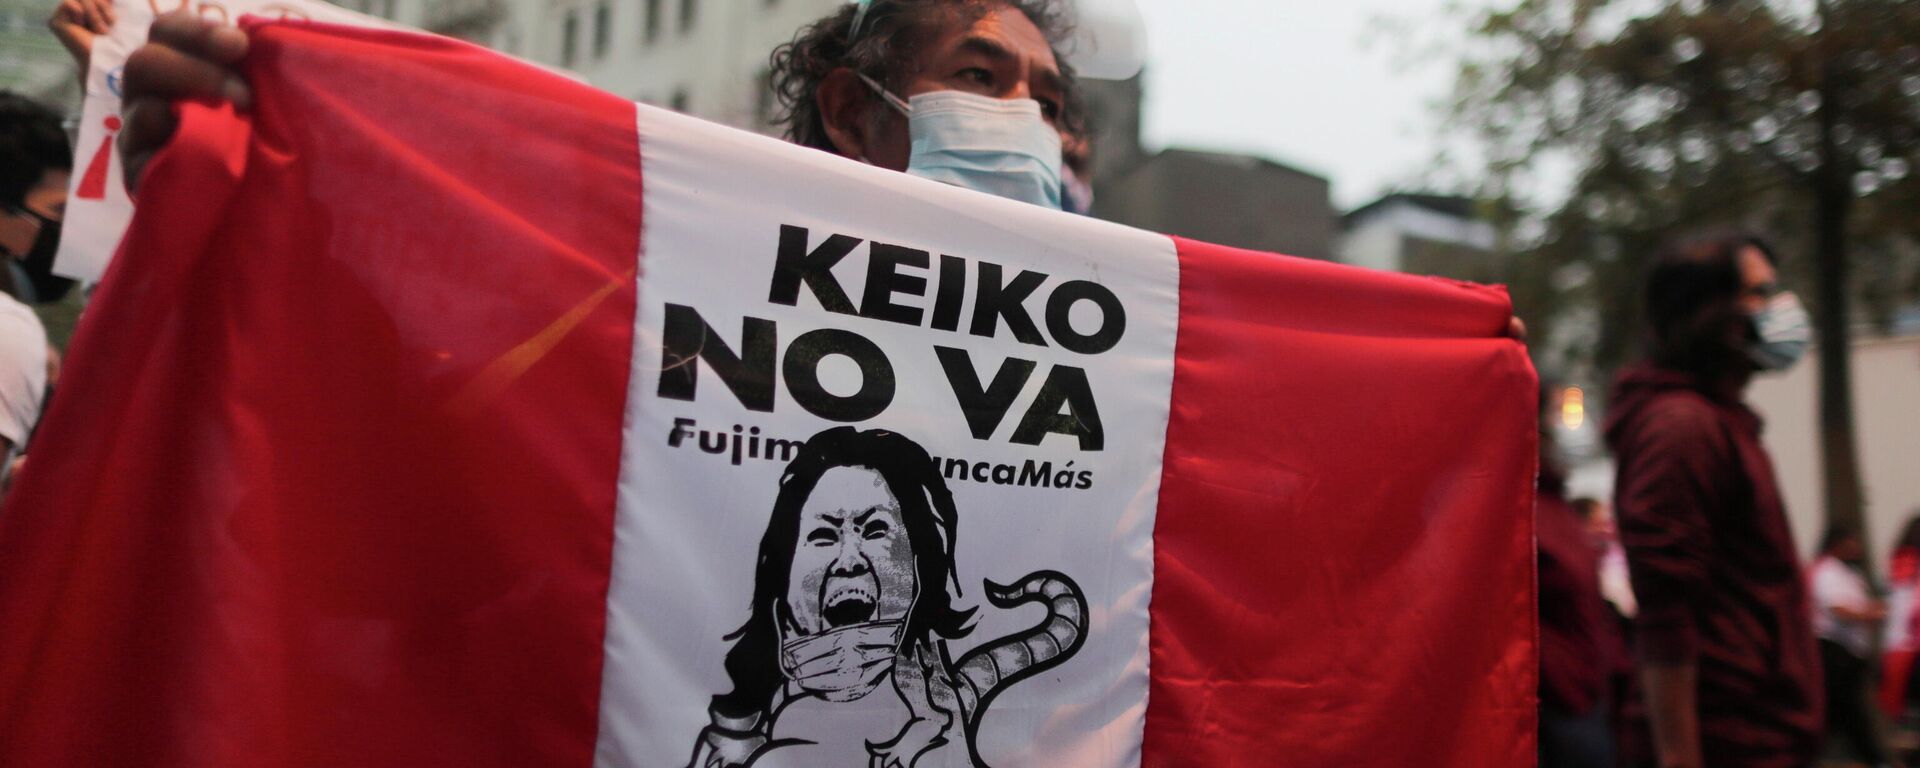 Marcha contra candidatura de Keiko Fujimori (Archivo) - Sputnik Mundo, 1920, 24.06.2021